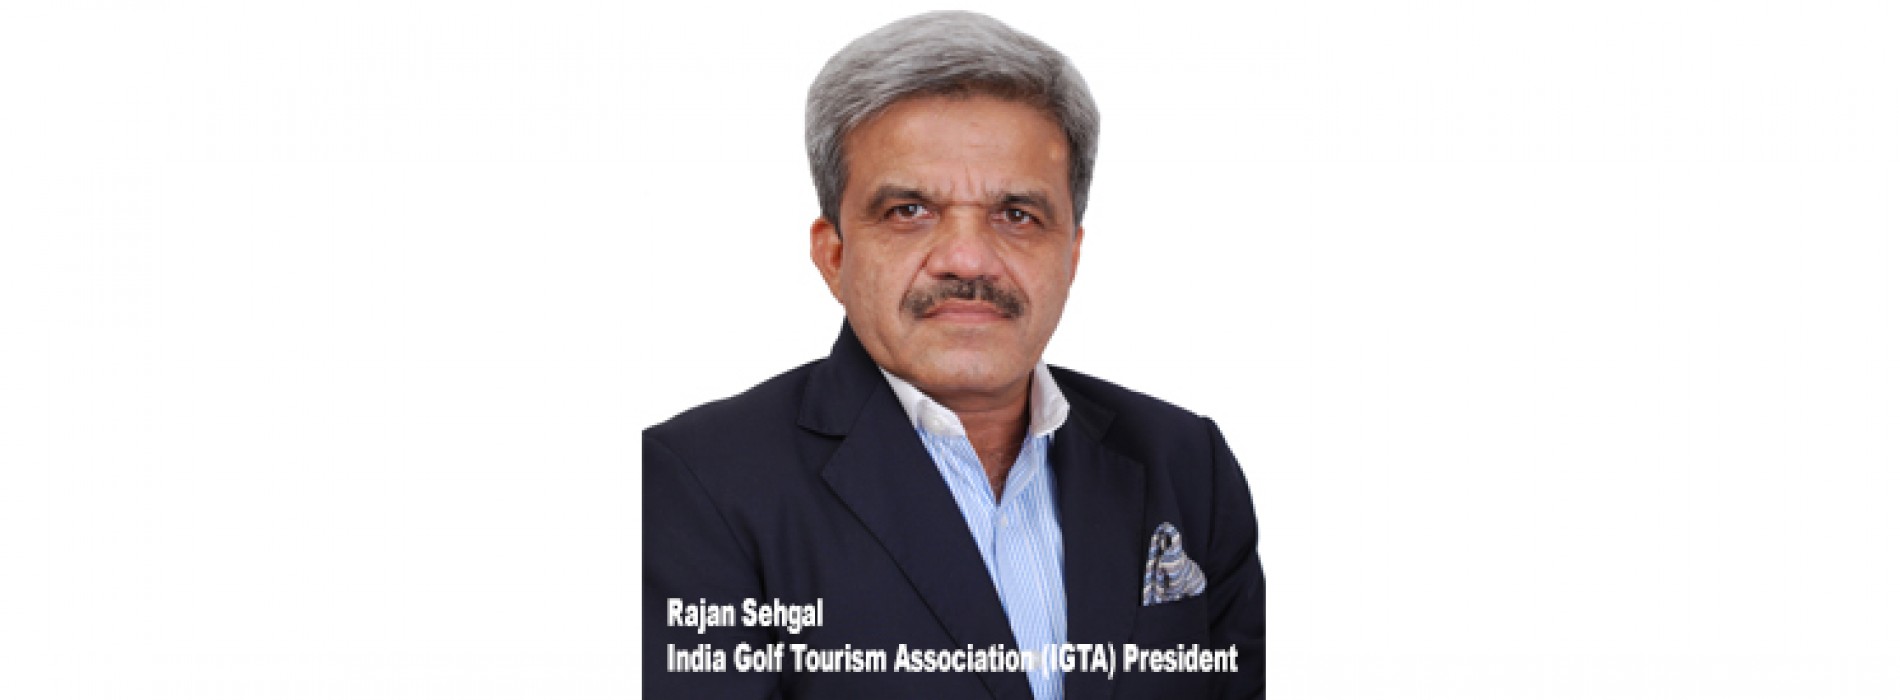 FICCI Golf Tourism Summit on October 26-27